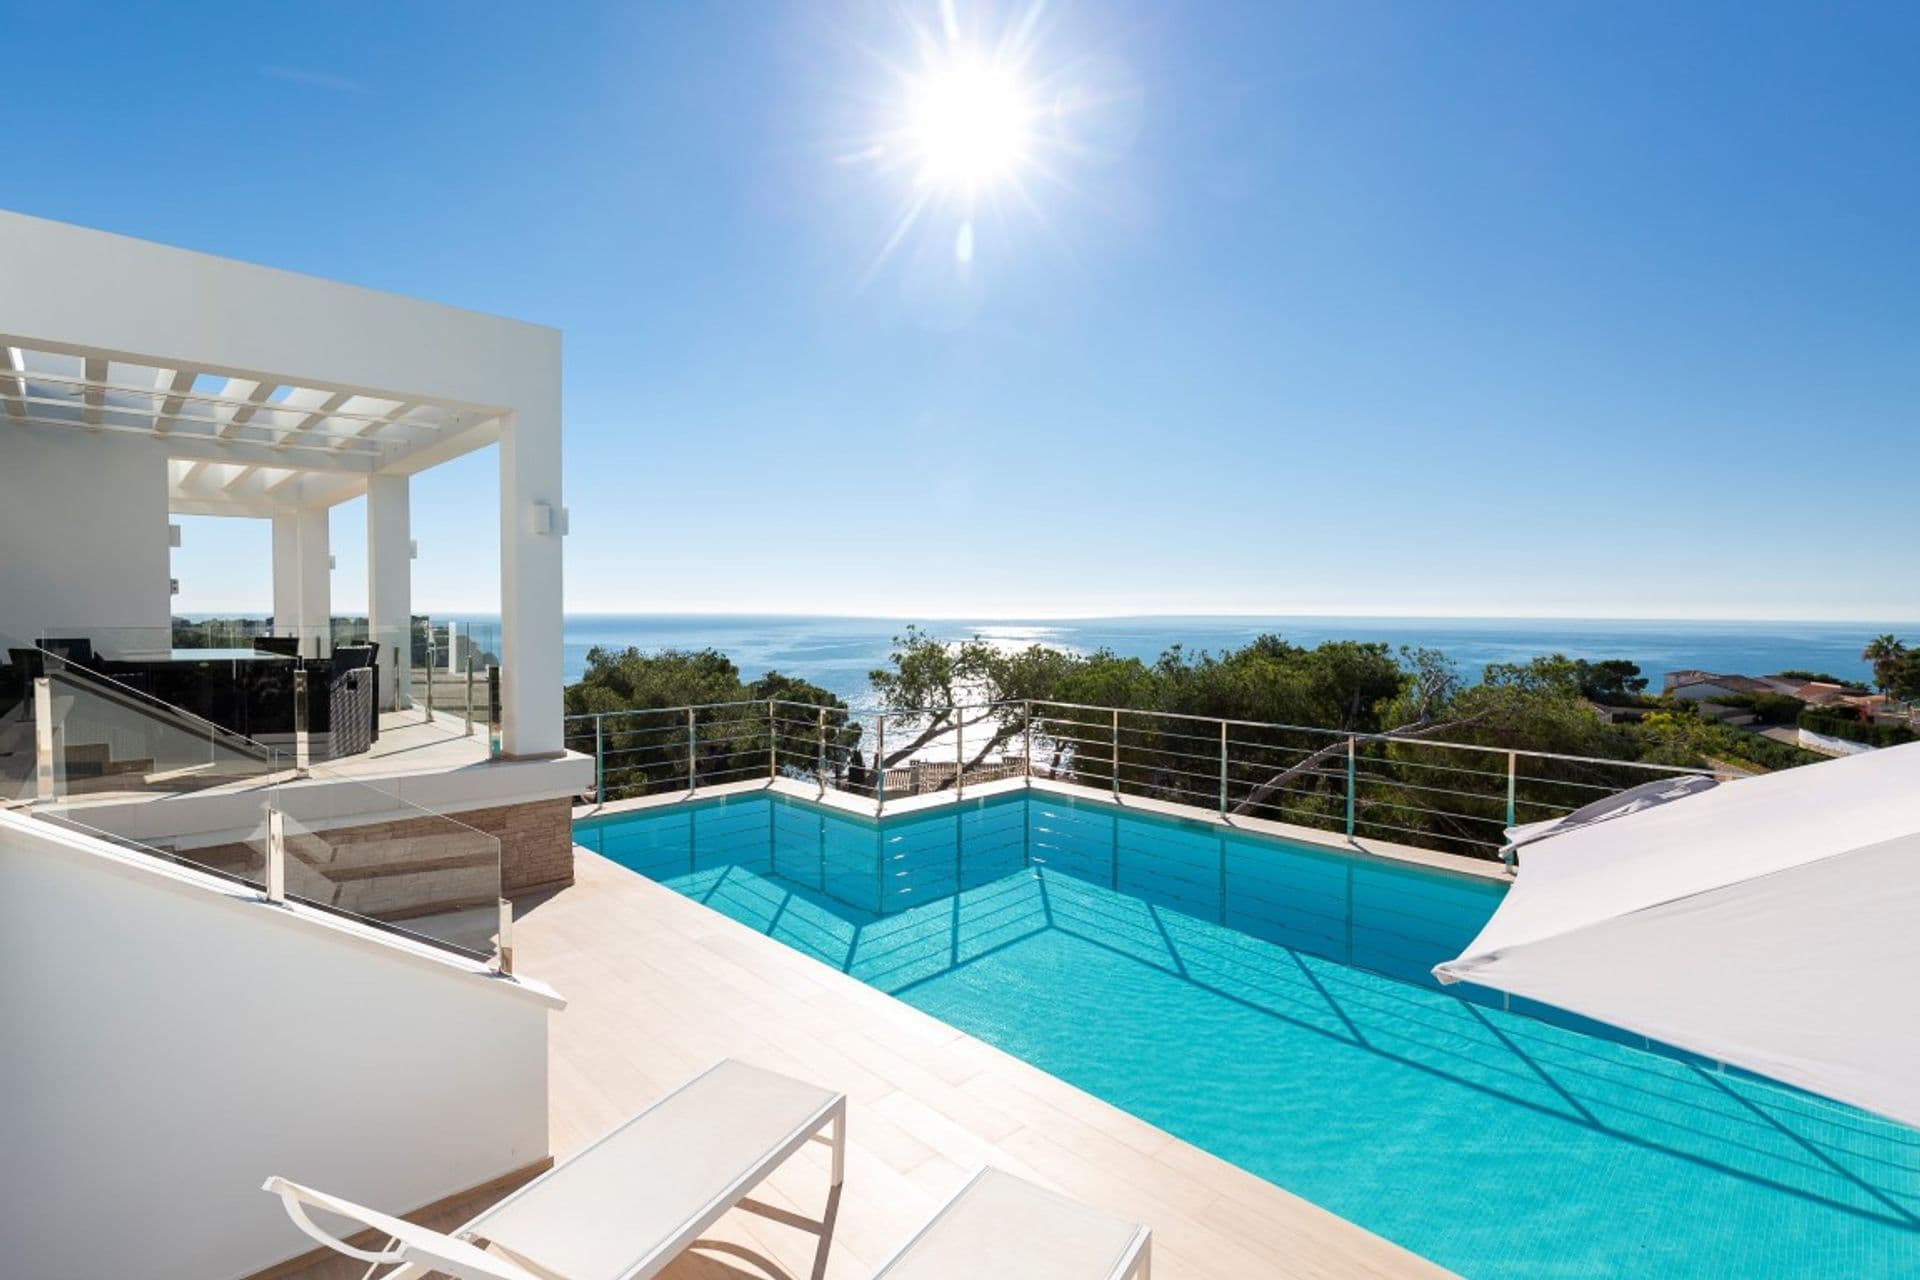 Moderne Villa mit Panorama-Blick aufs Meer an der Costa Nova Marina in Jávea.